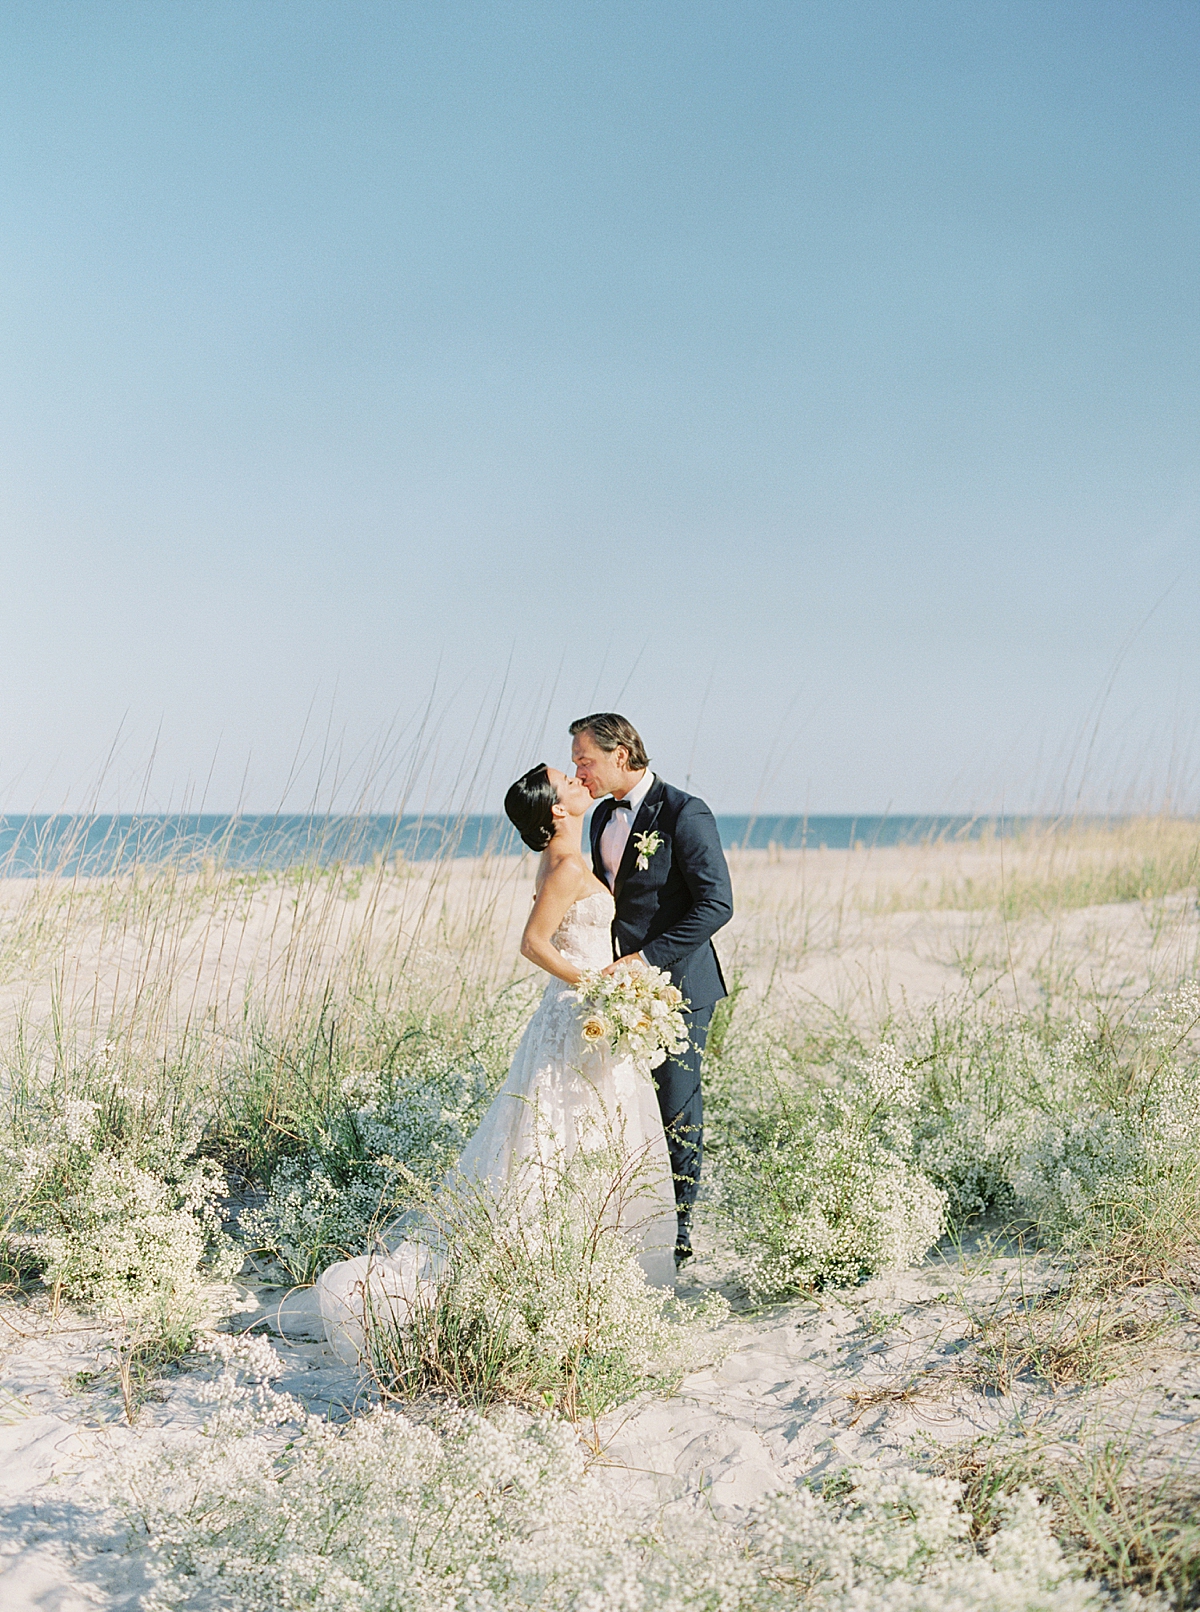 Mary Ann Craddock is a luxury beach wedding on film photographer.